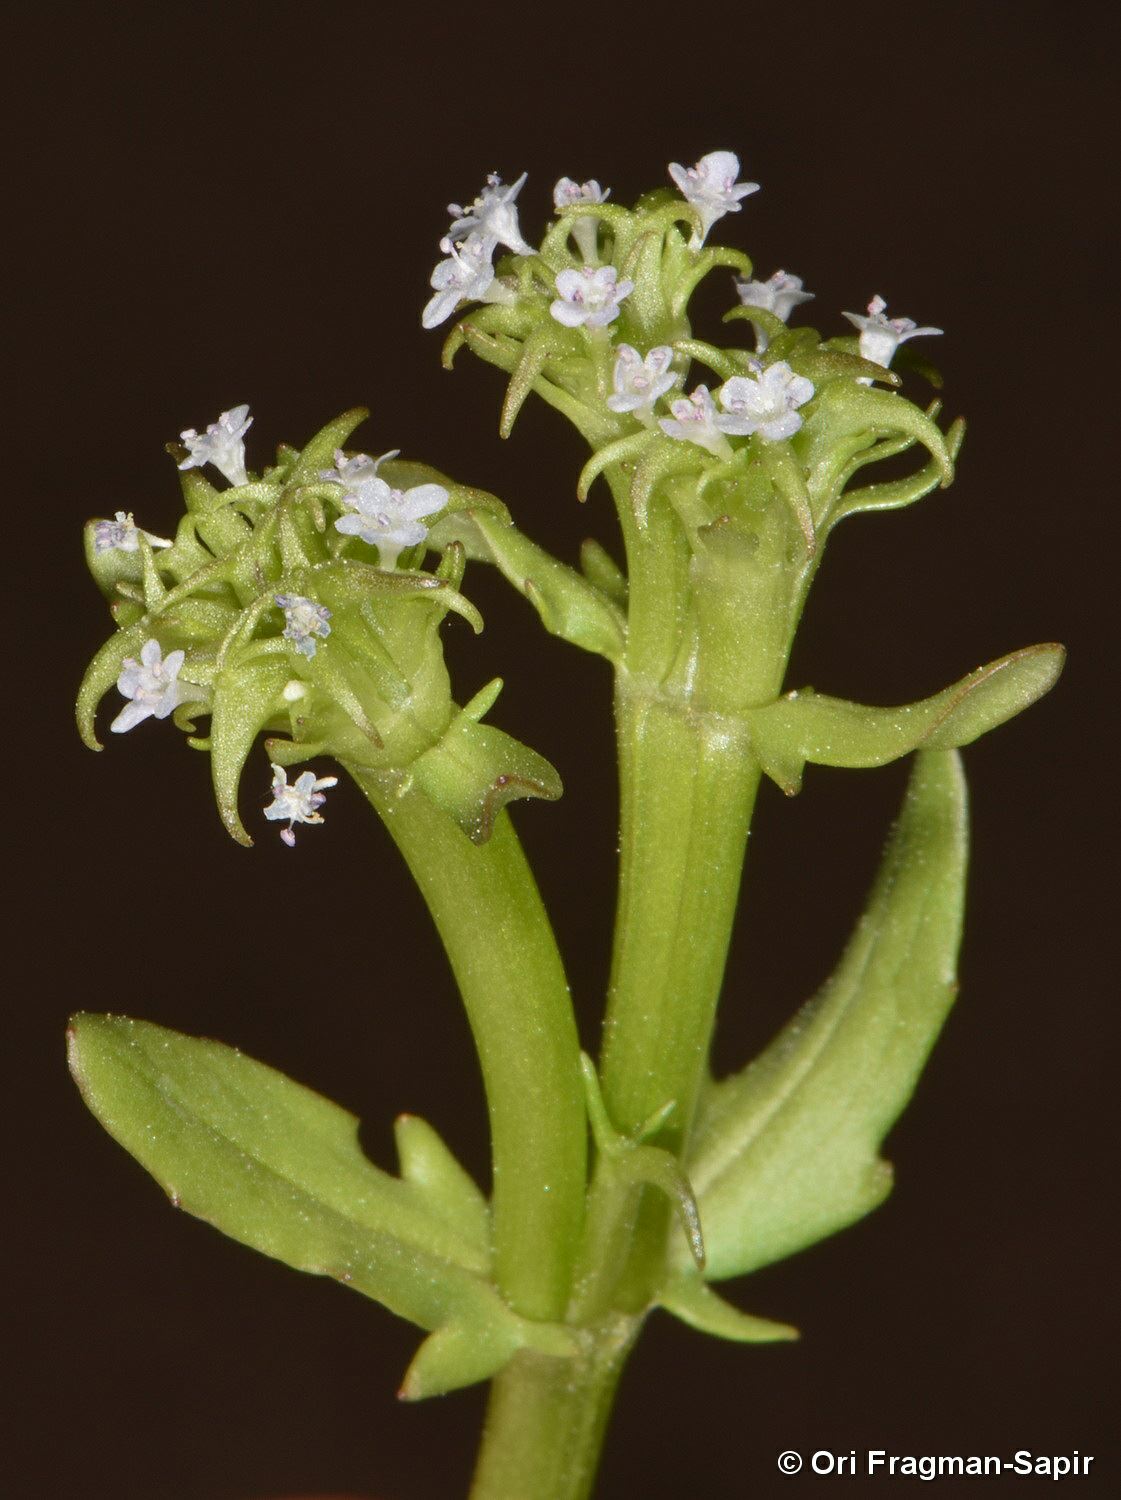 Valerianella echinata - Prickly Cornsalad, Prickly Valerian, ולריינית דוקרנית, ולריינית דוקרנית